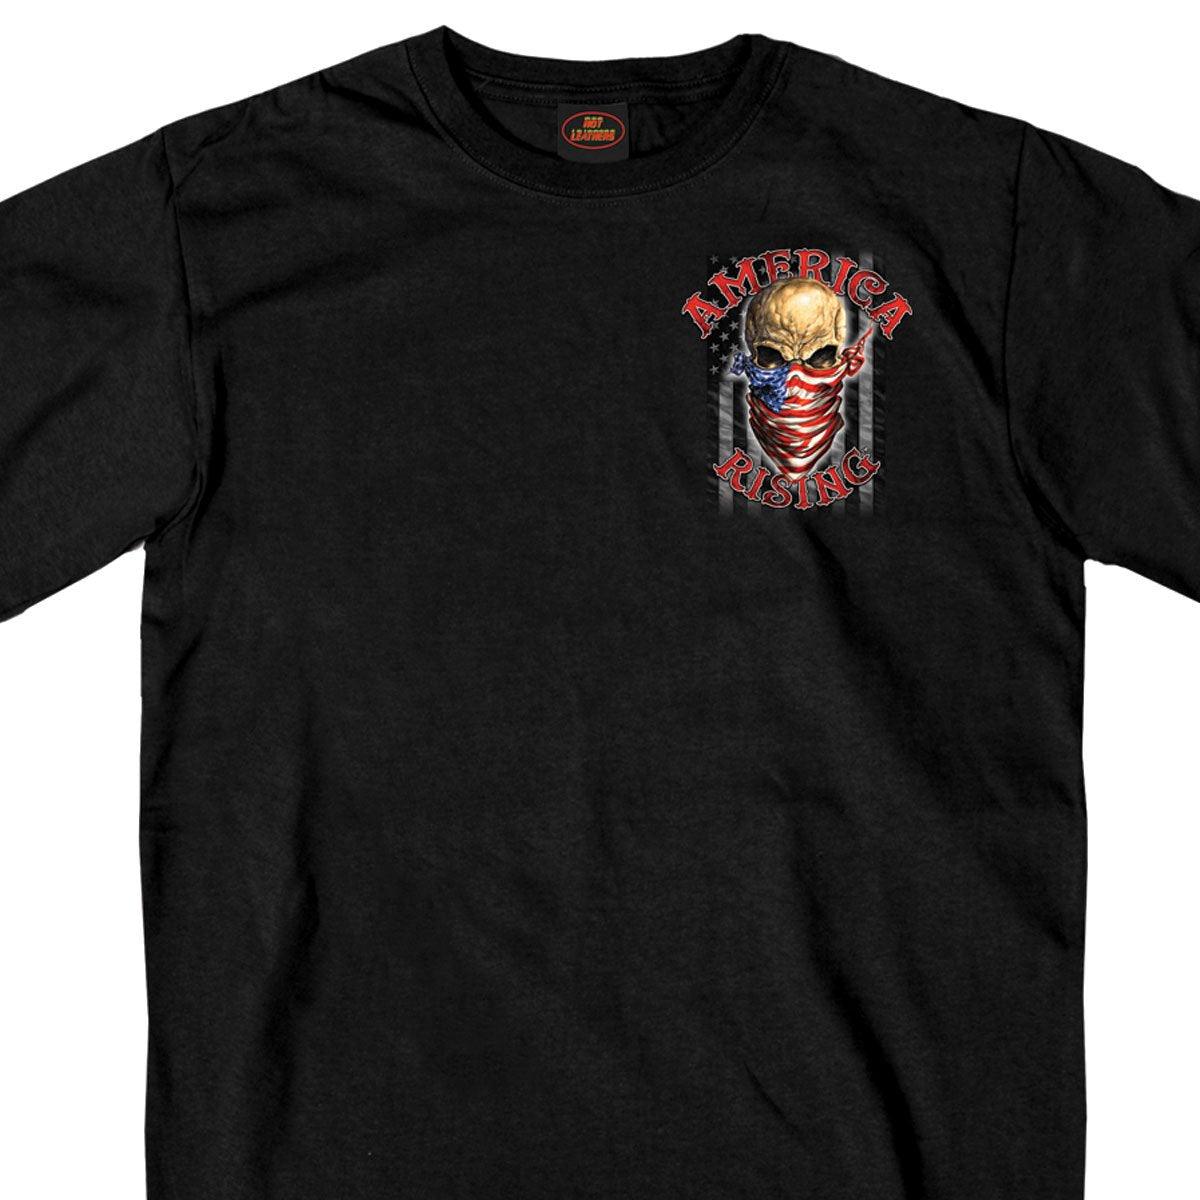 Hot Leathers Men's Skull Bandanna T-Shirt, Black - American Legend Rider